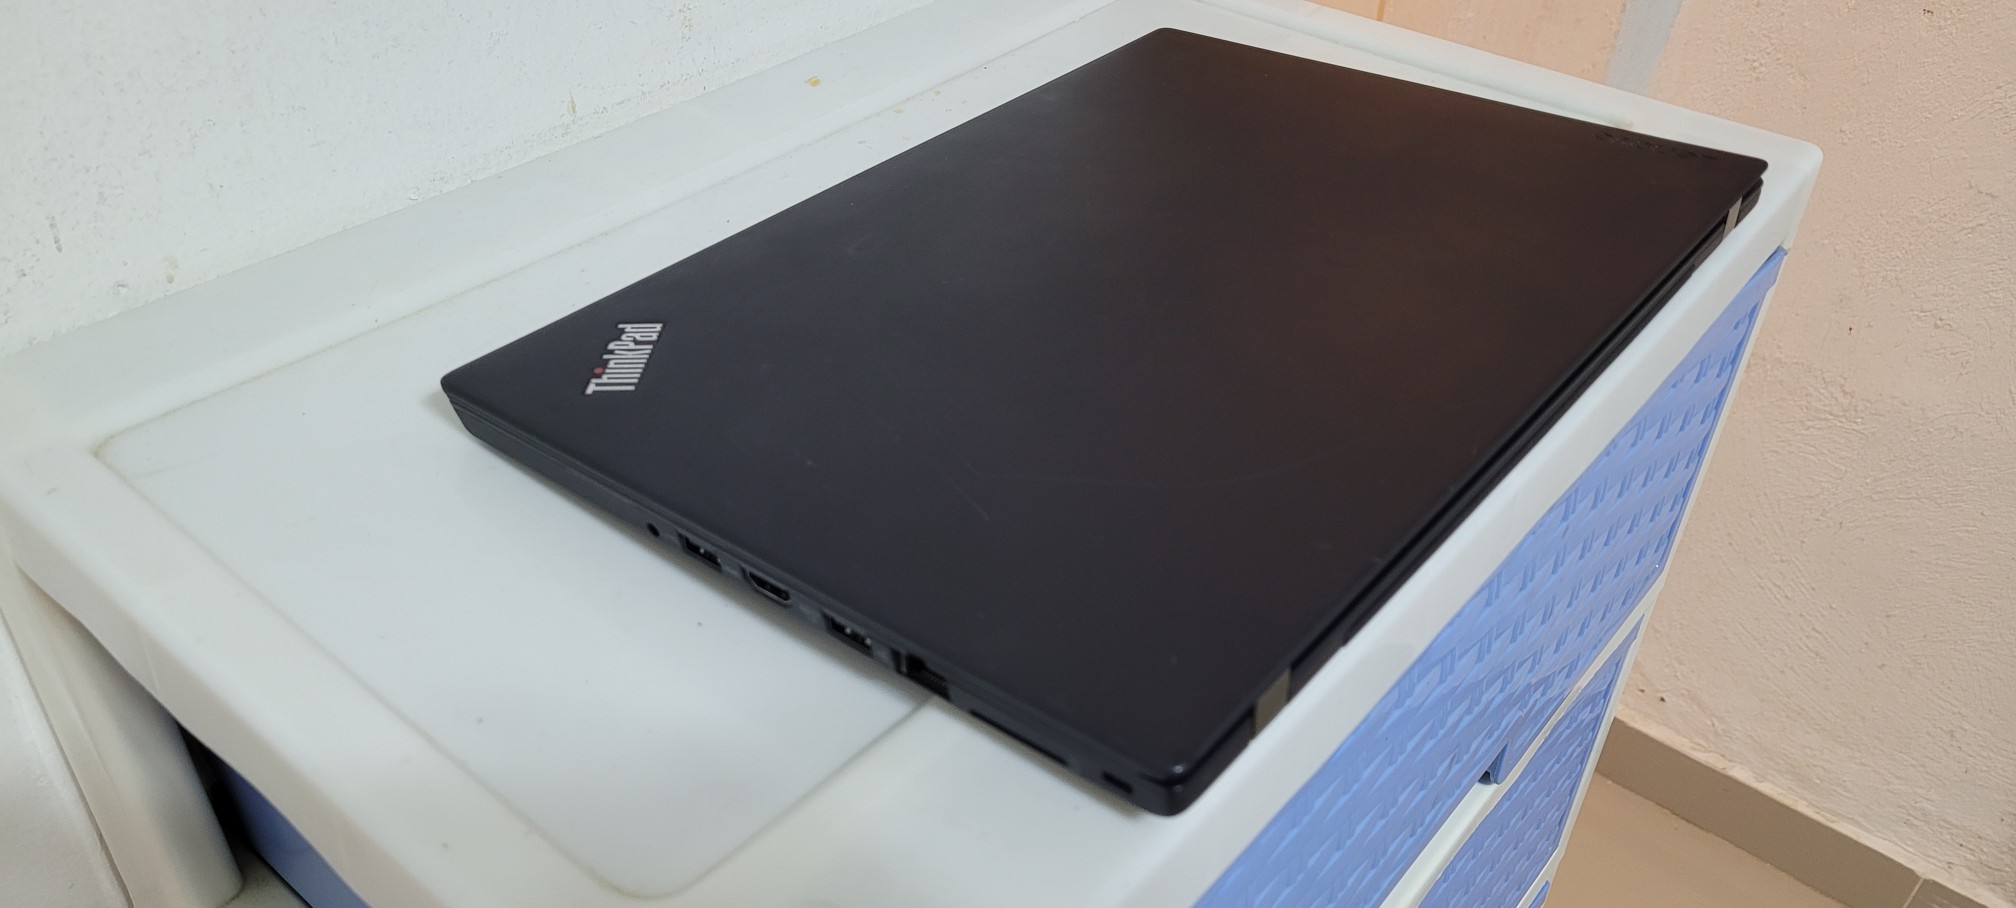 computadoras y laptops - Laptop Slim lenovo 14 Pulg Core i7 Ram 8gb Disco 256gb SSD full 1080p 2